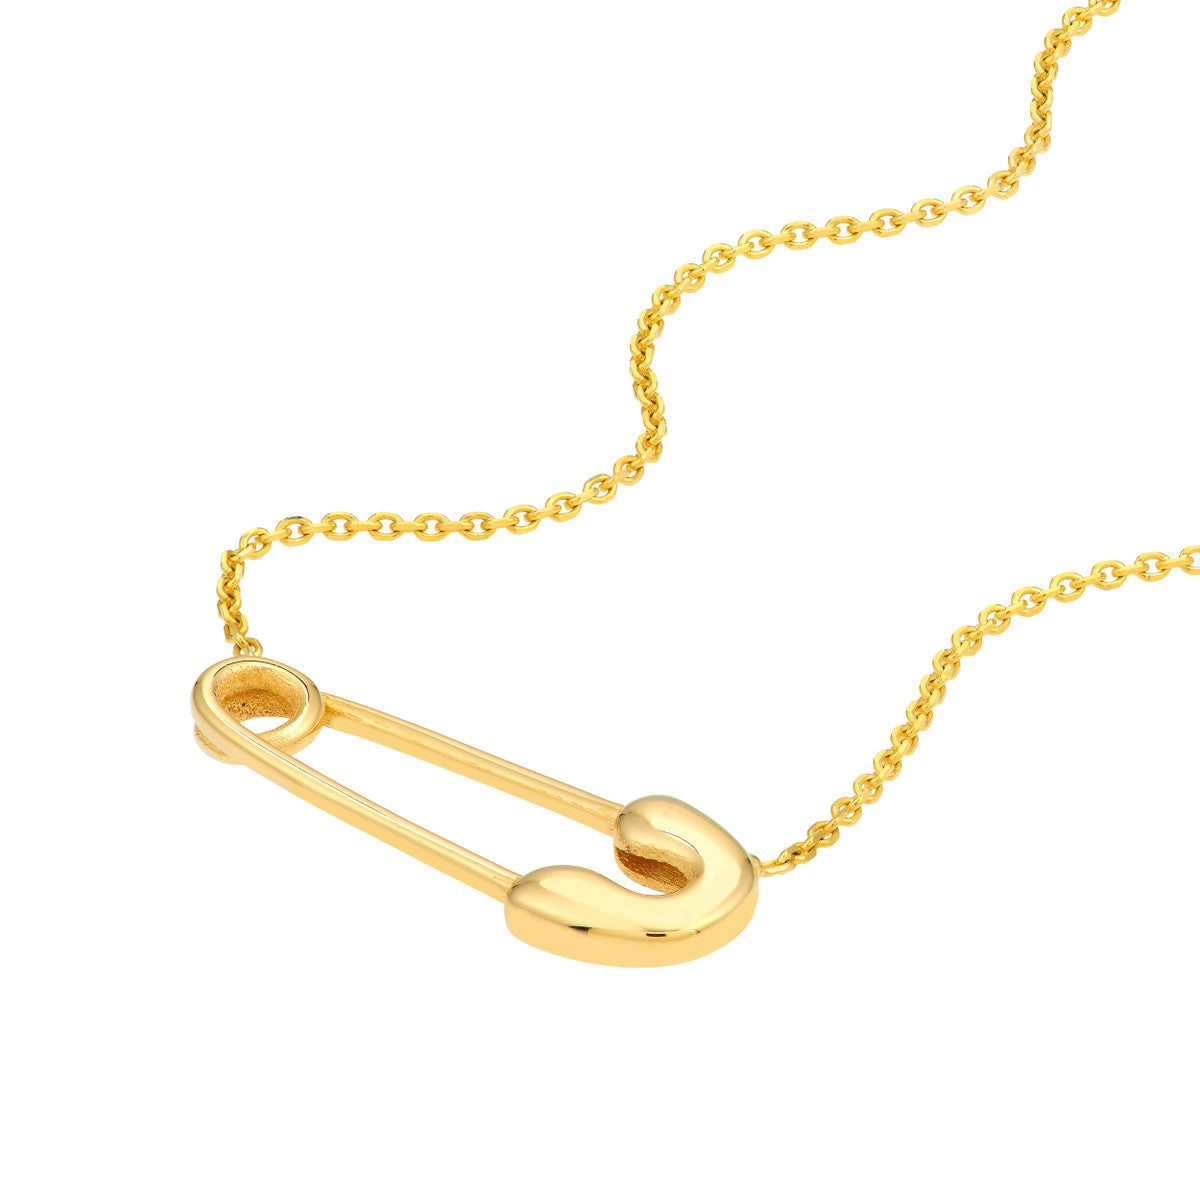 14k Yellow Gold Safety Pin Bracelet